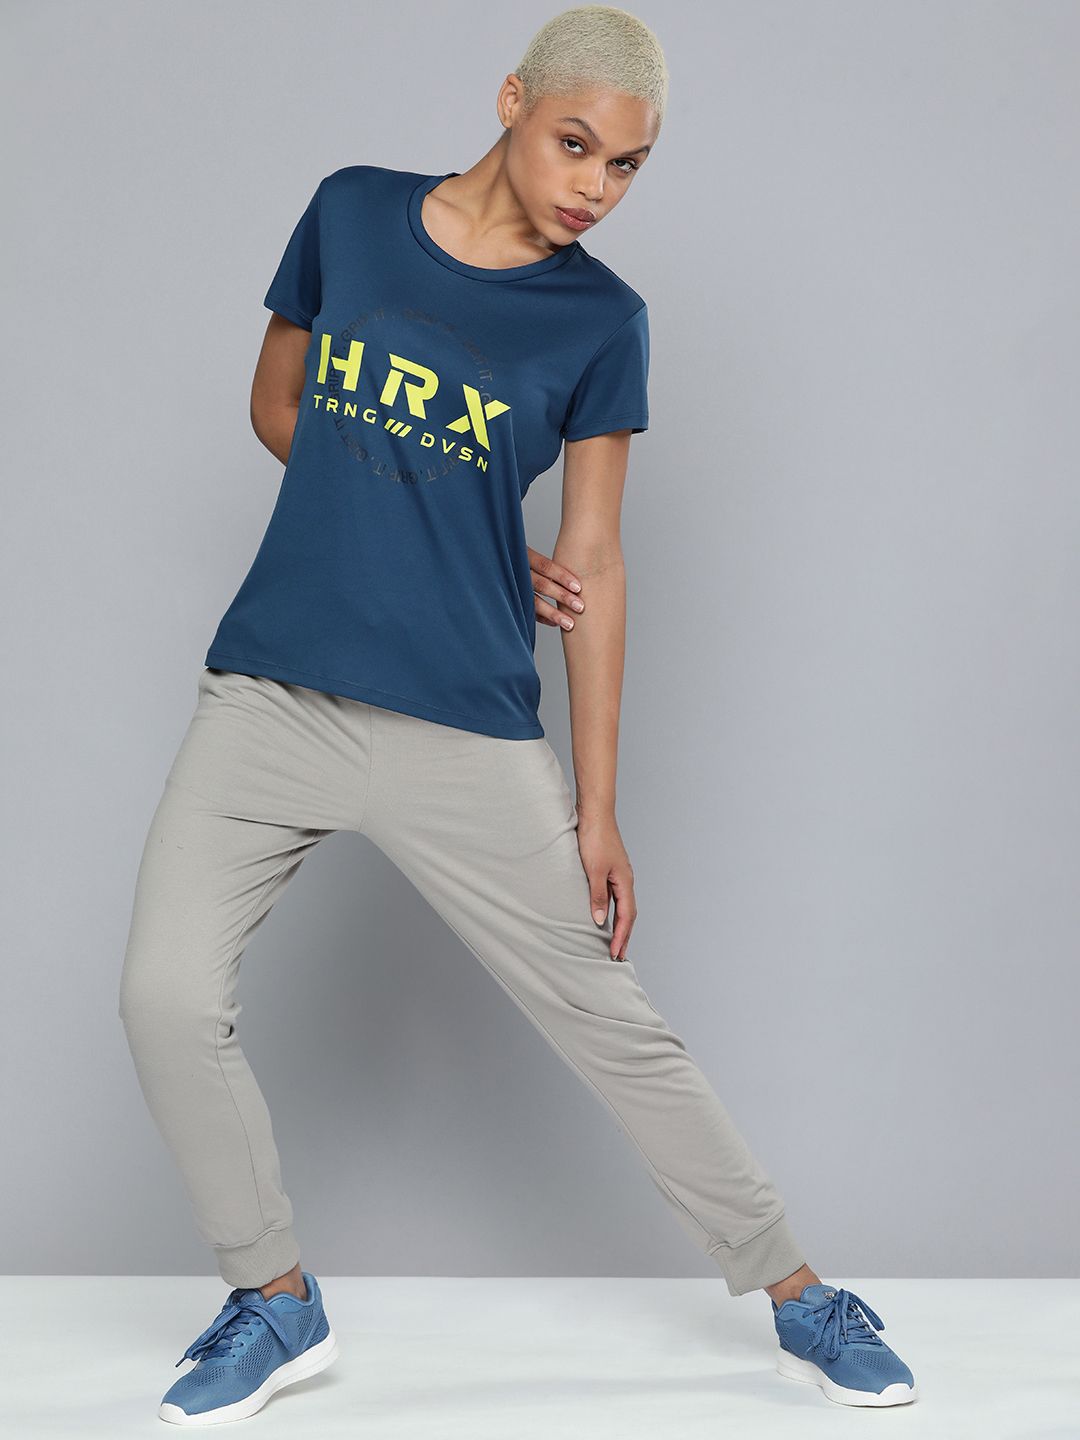 HRX By Hrithik Roshan Training Women Estate Blue Rapid-Dry Brand Carrier T-shirt Price in India